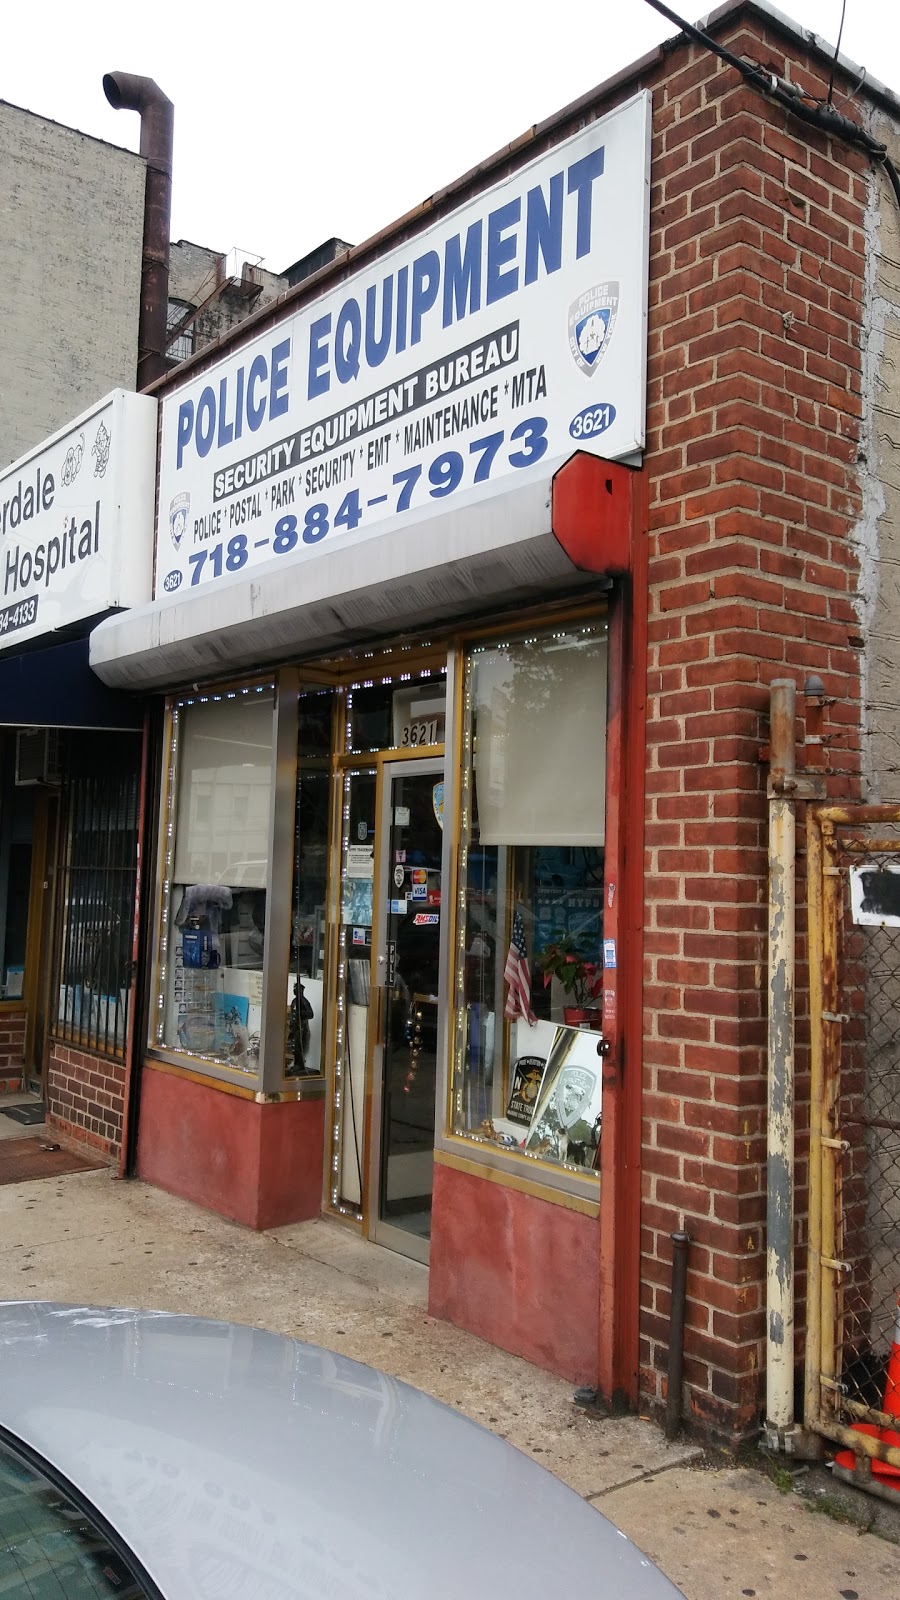 Police & Security Equipment Bureau | 3621 Kingsbridge Ave, Bronx, NY 10463 | Phone: (718) 884-7973